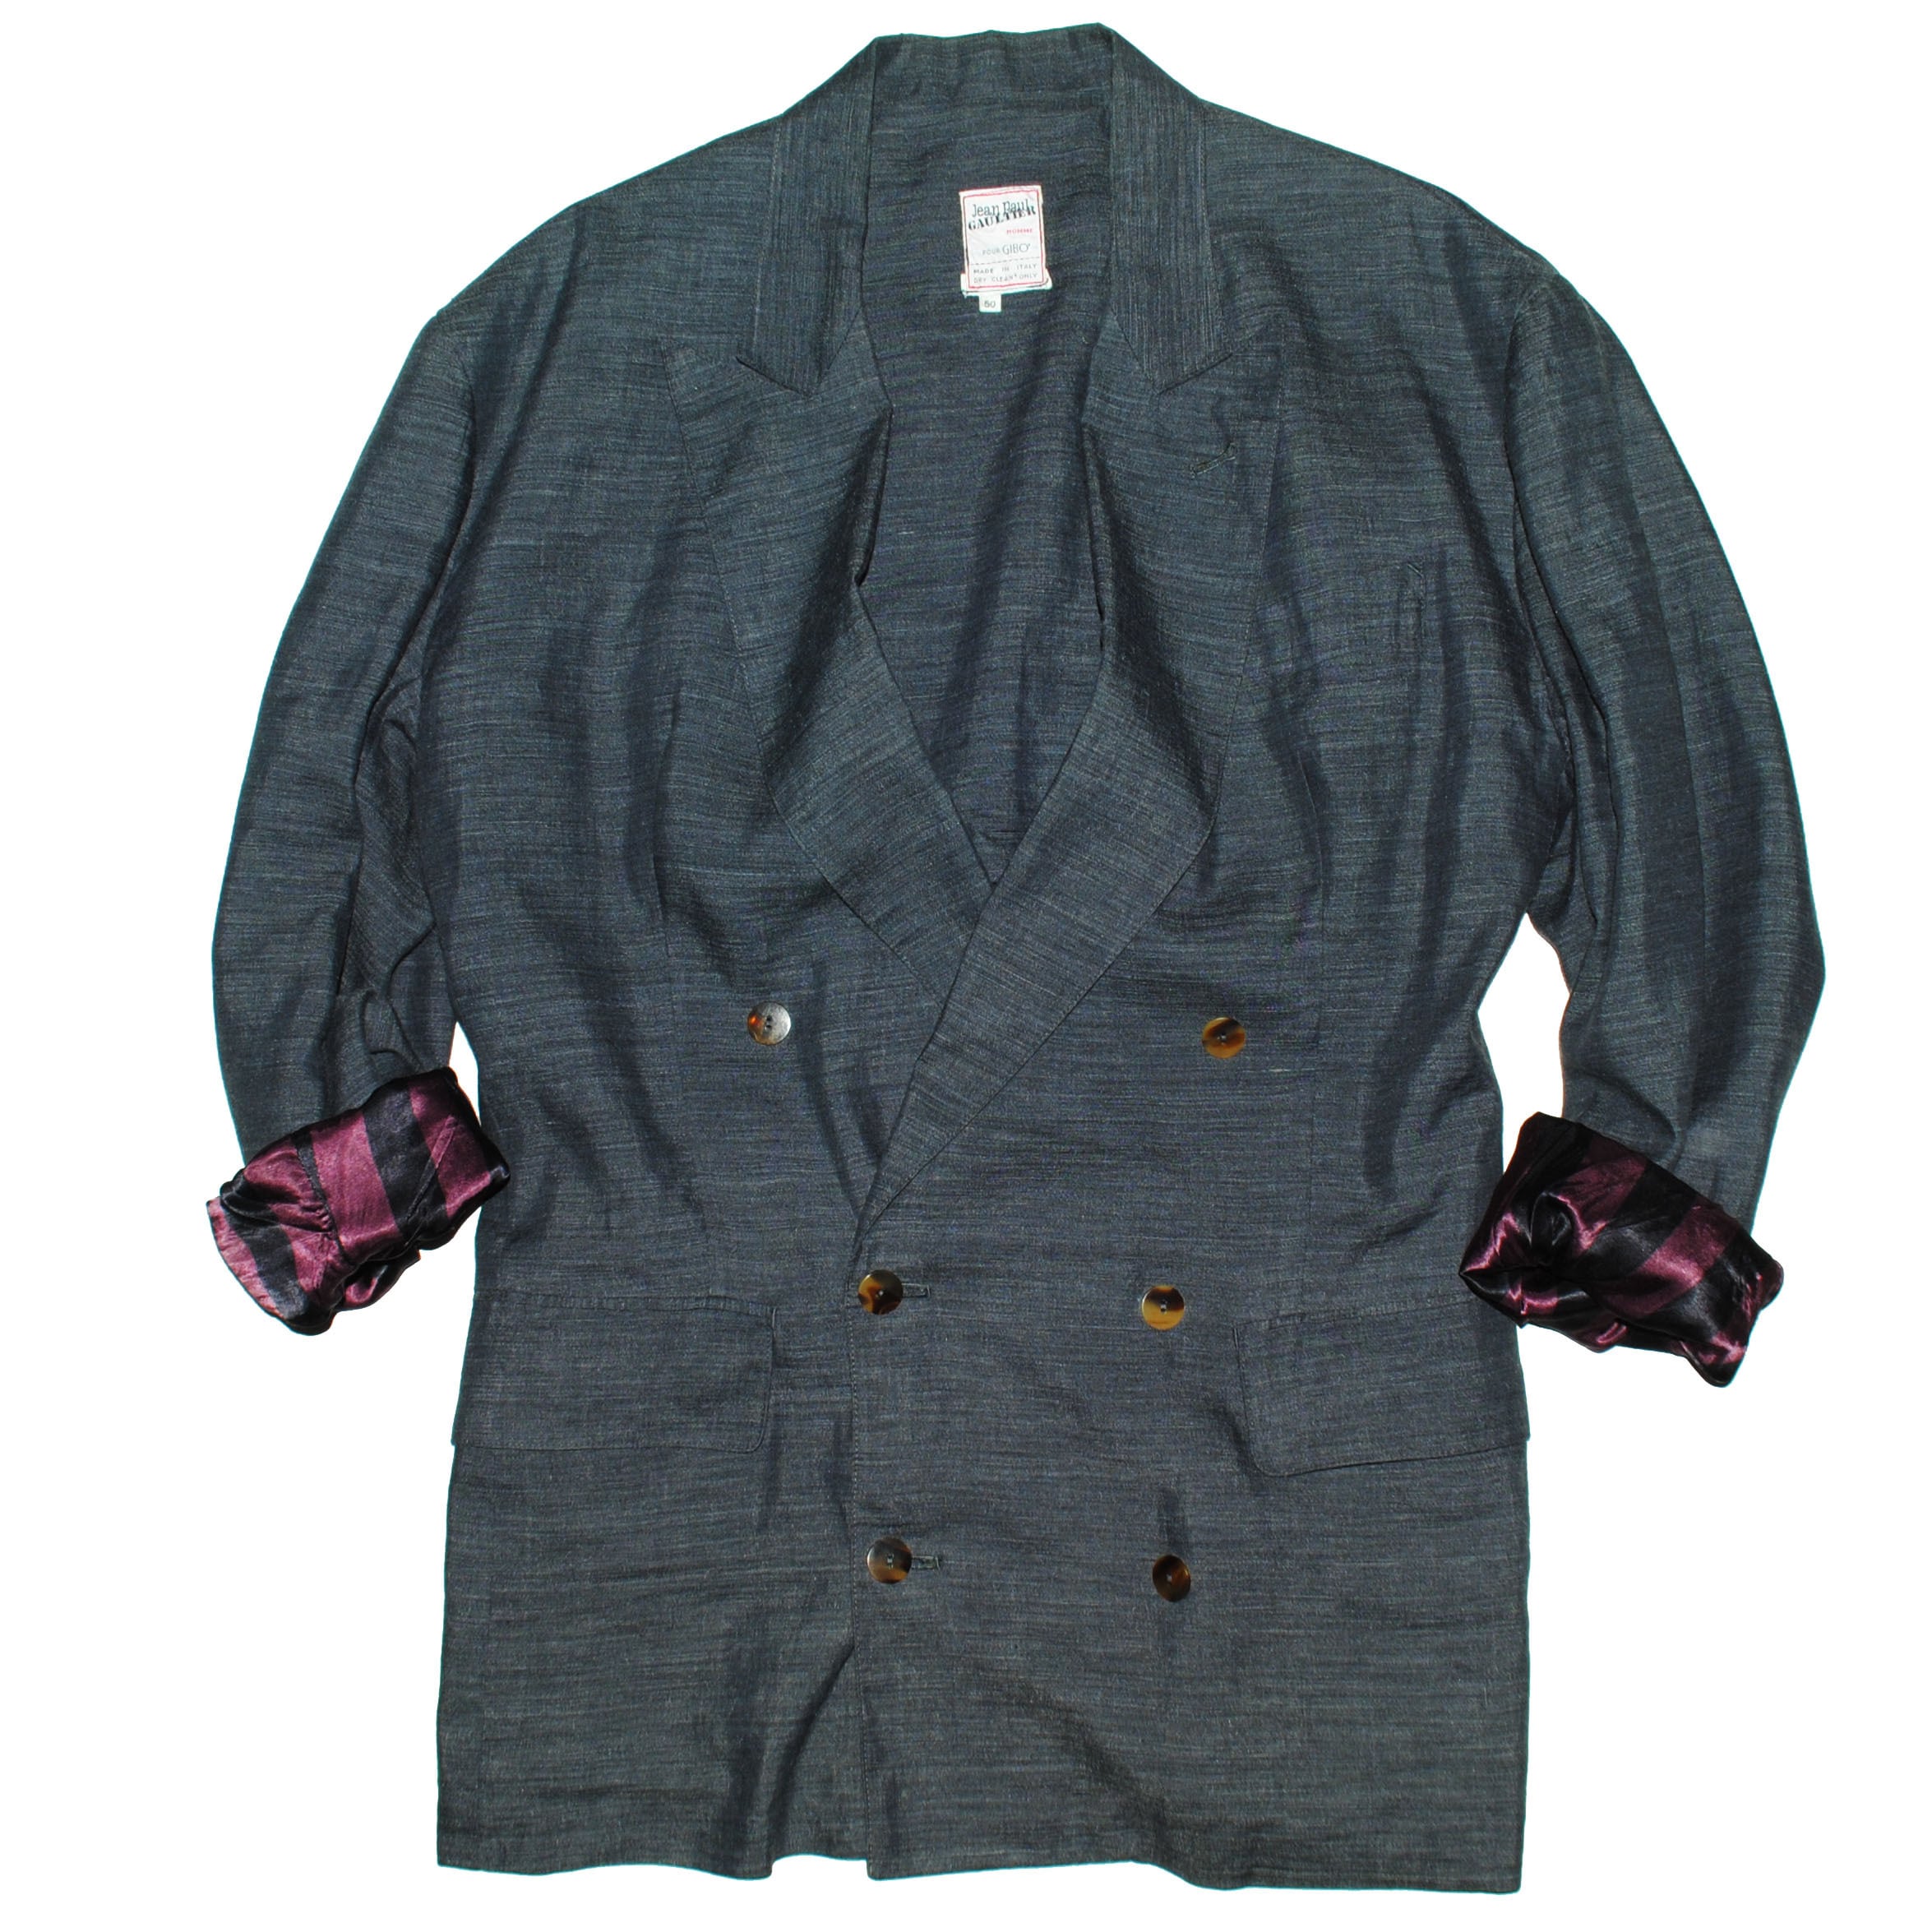 GIBOby Jean Paul Gaultier s vintage Jacket   excube.e shop